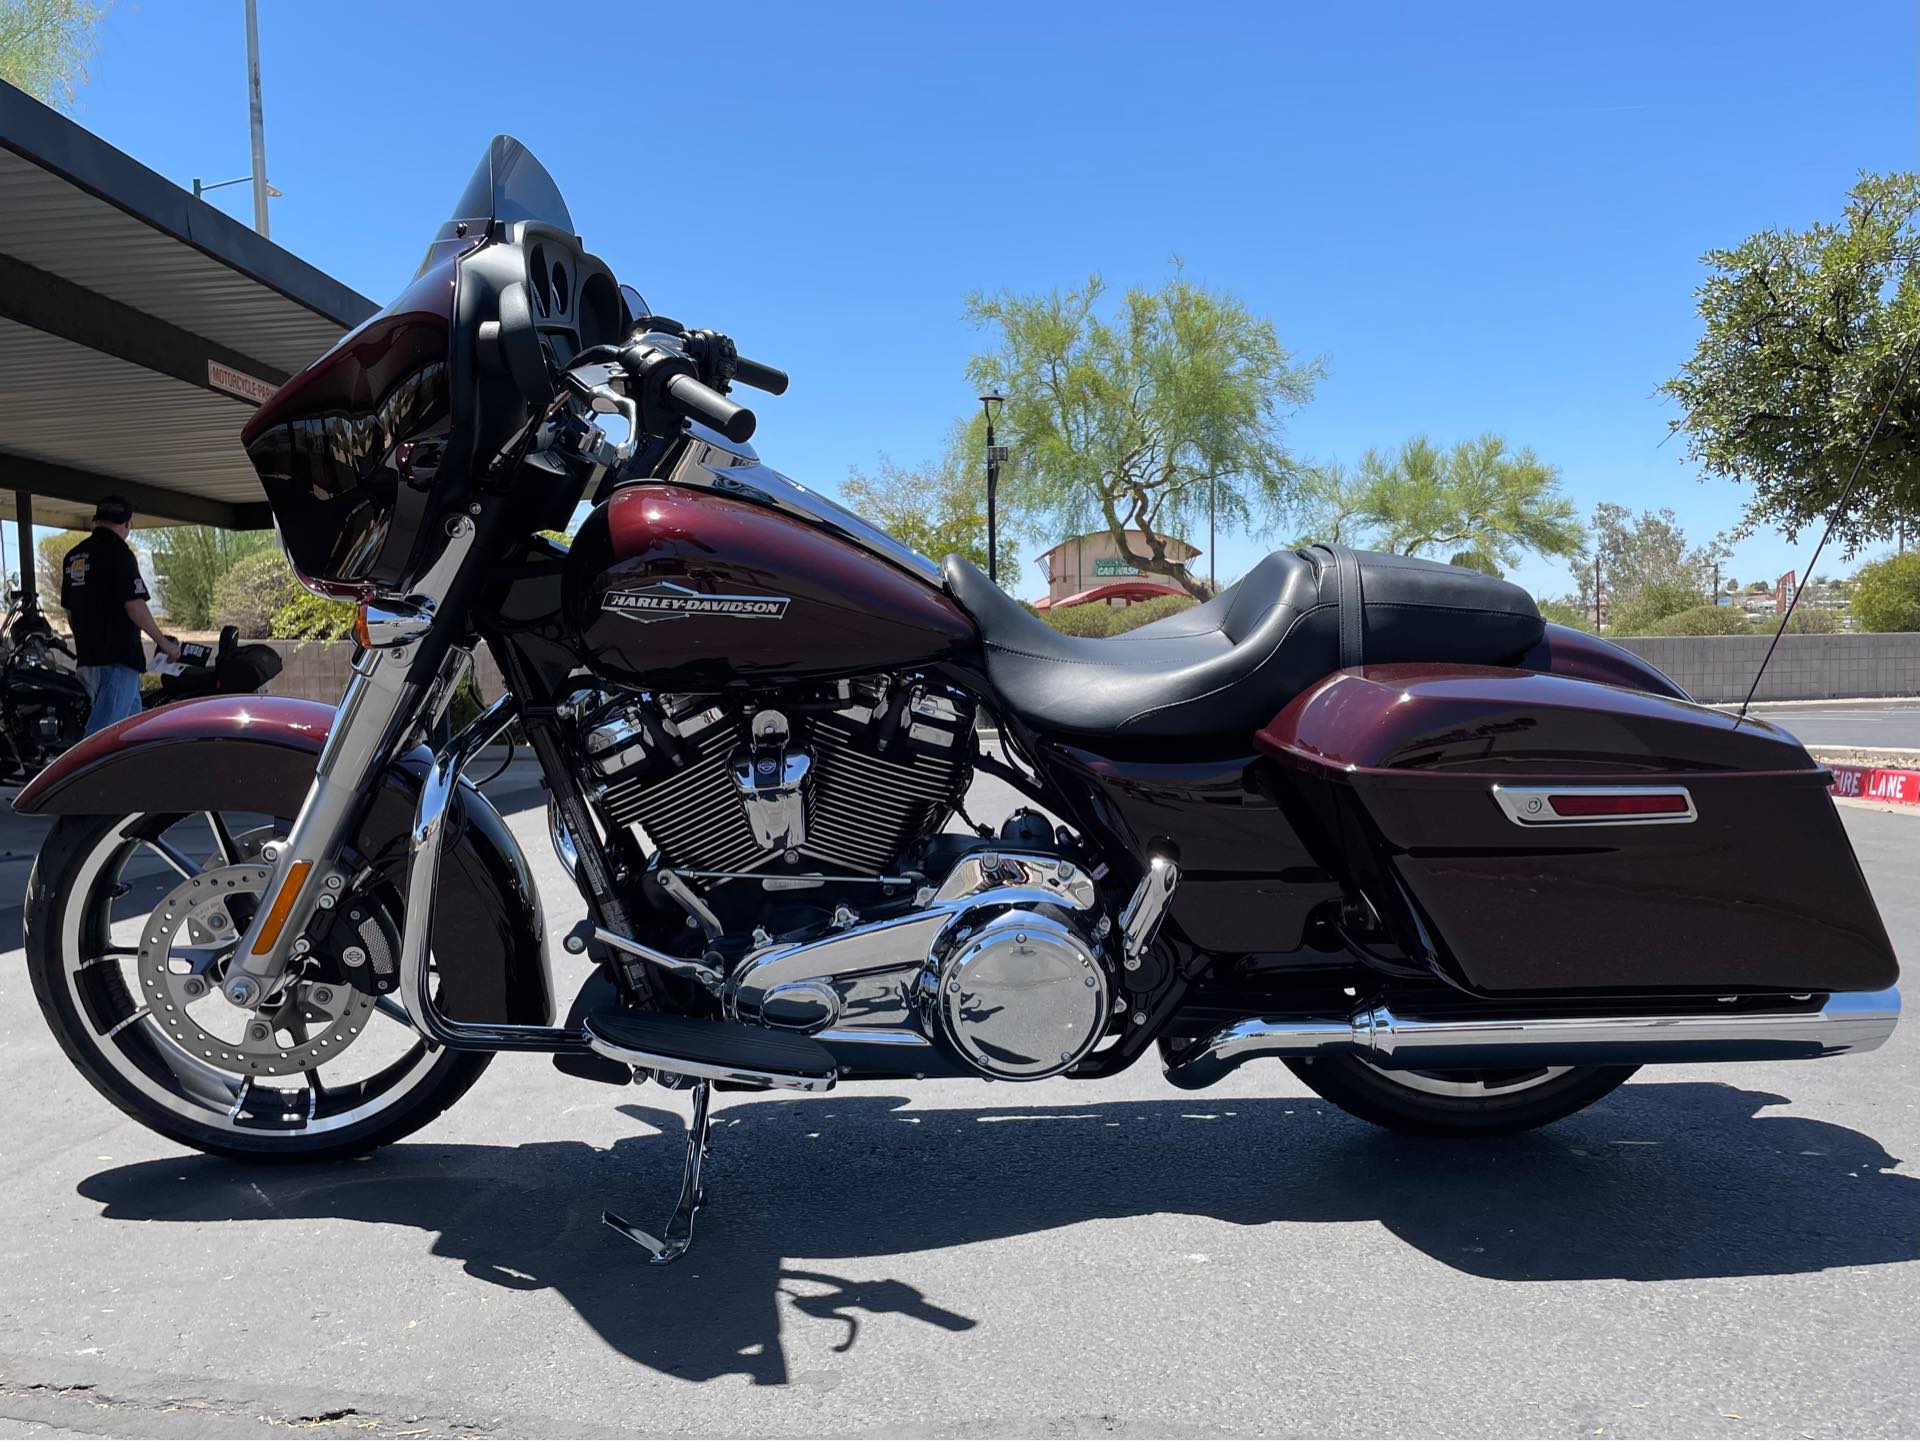 2022 Harley-Davidson Street Glide Base at Buddy Stubbs Arizona Harley-Davidson